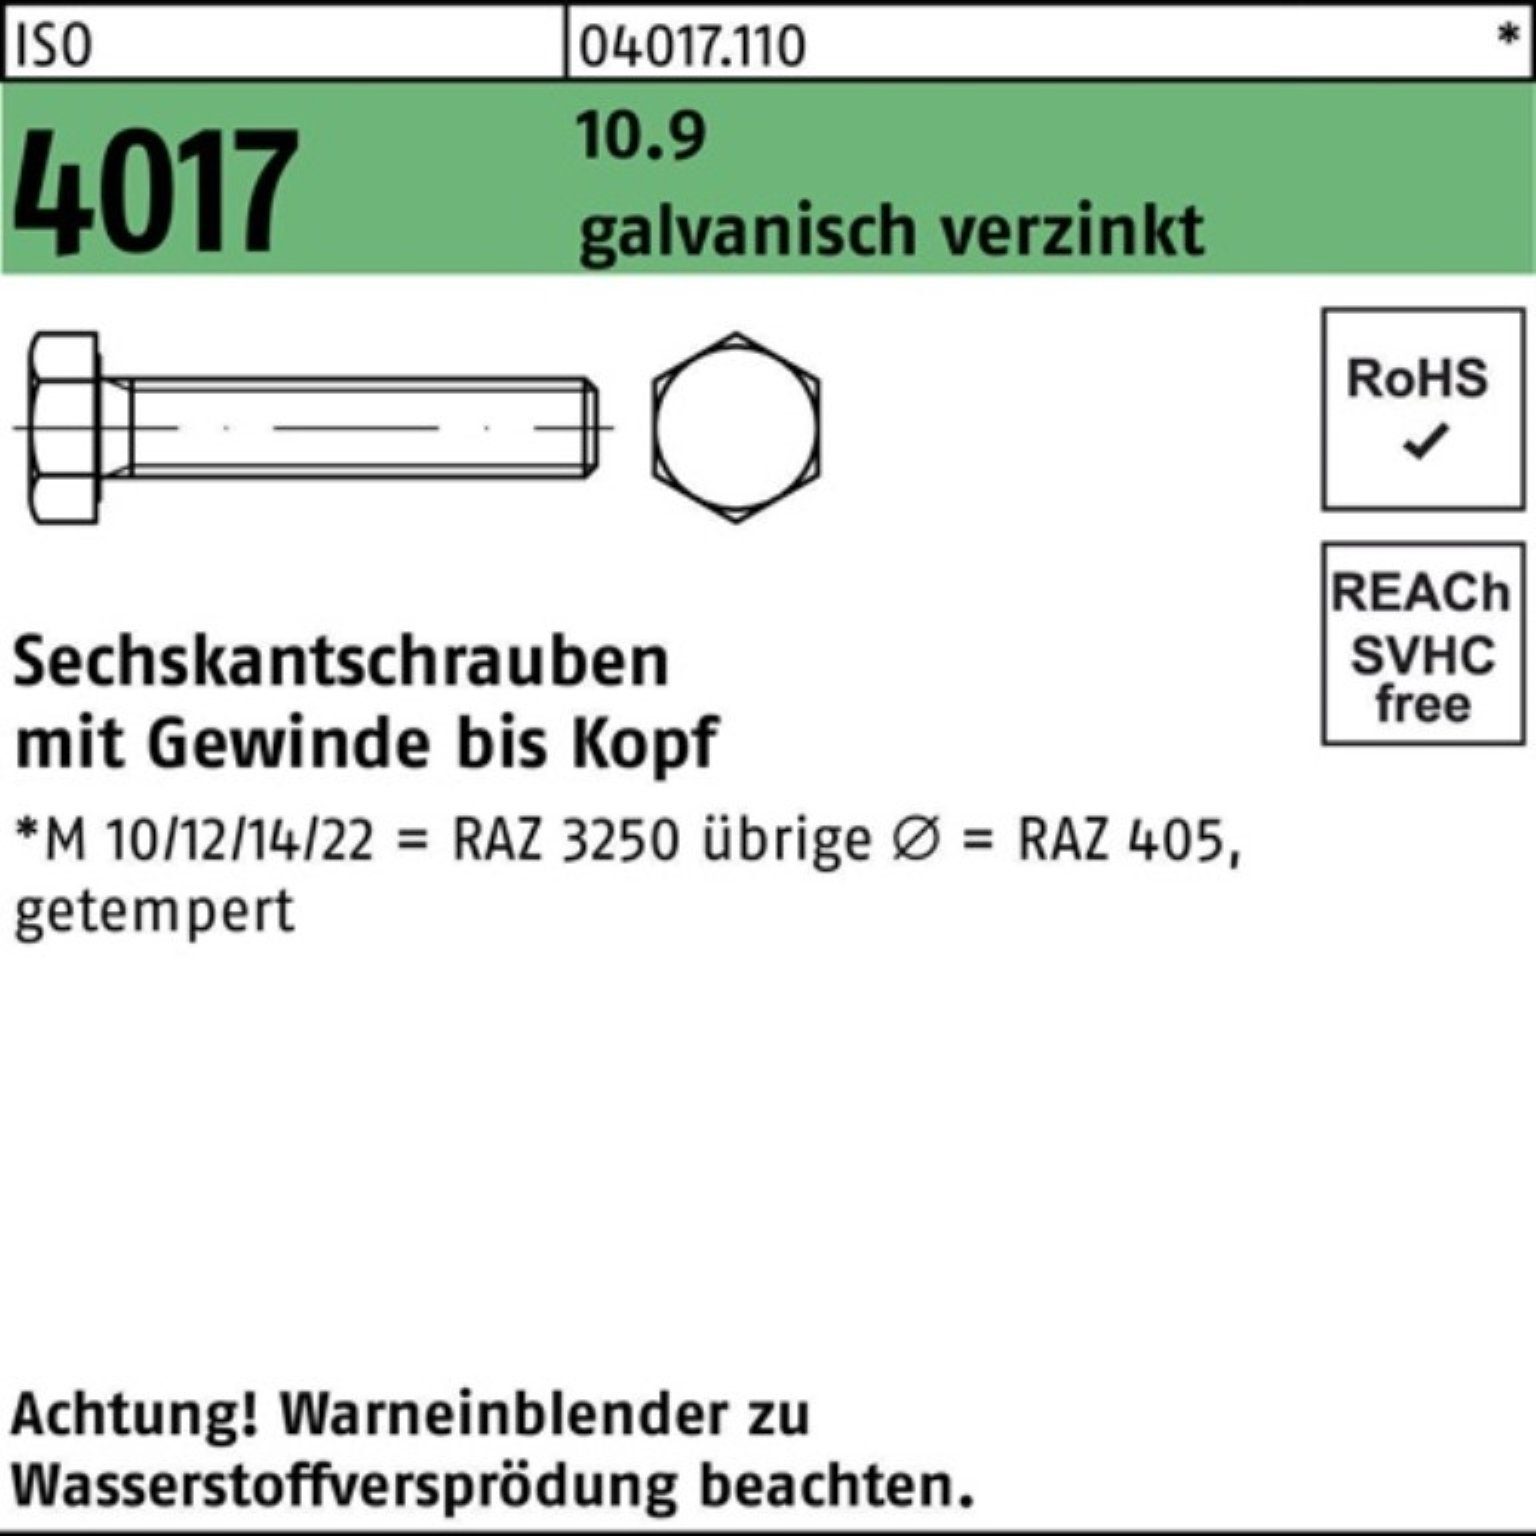 Sechskantschraube Sechskantschraube 200er galv.verz. M8x 4017 10.9 Bufab Pack 55 VG ISO 200 St